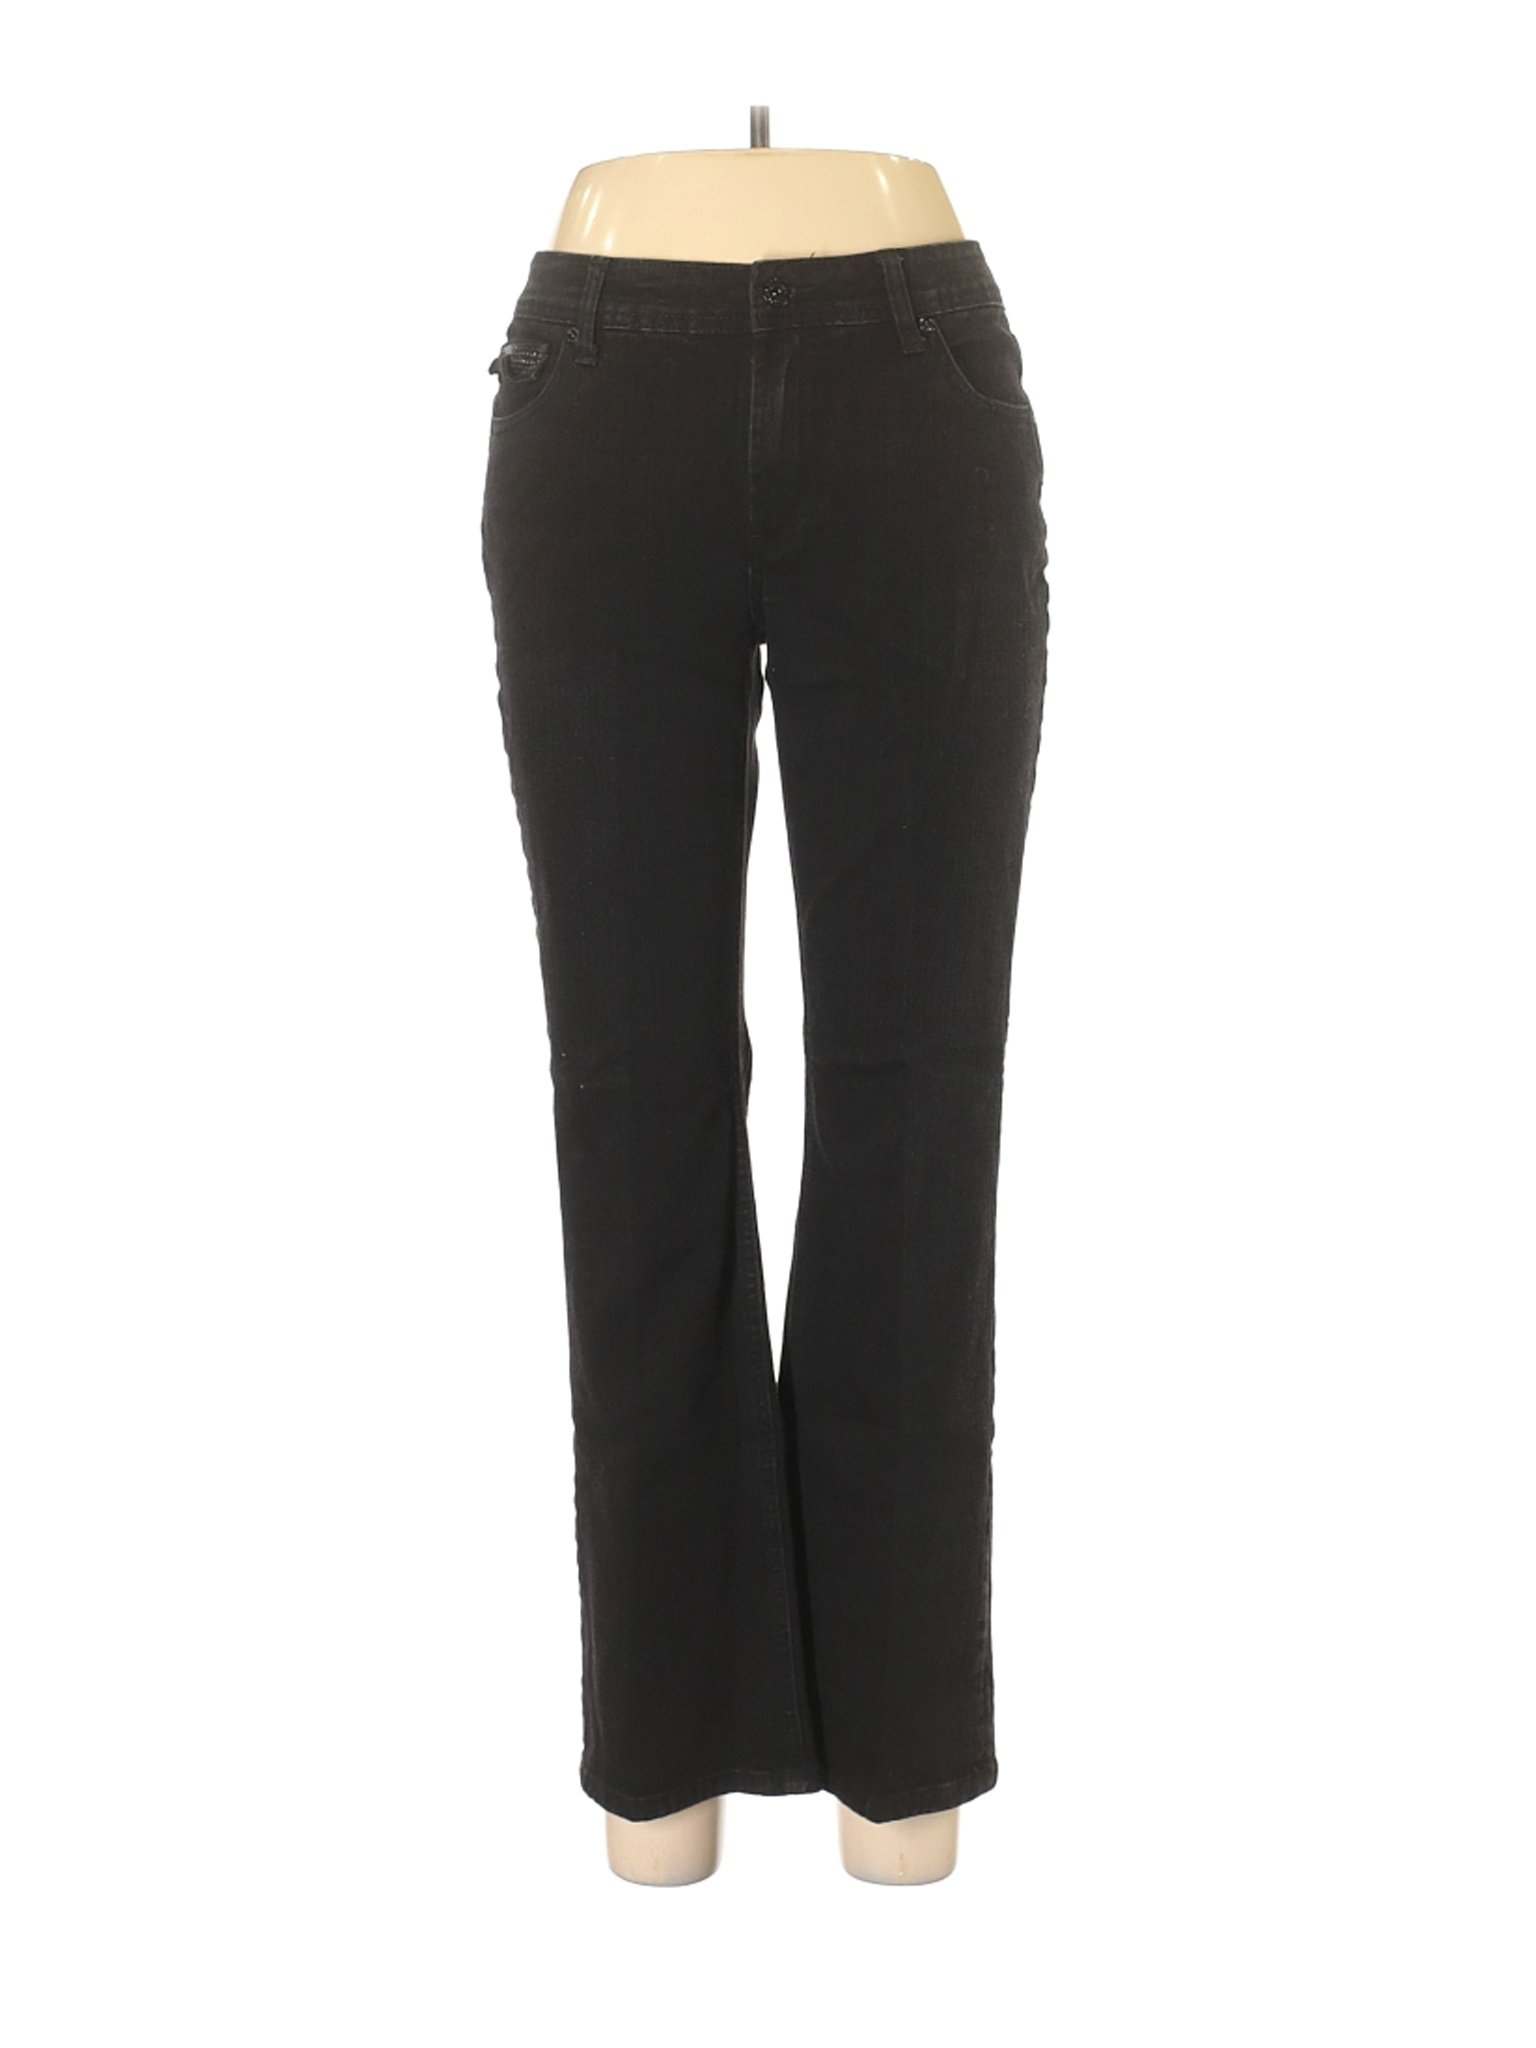 Chico's Women Black Jeans M | eBay